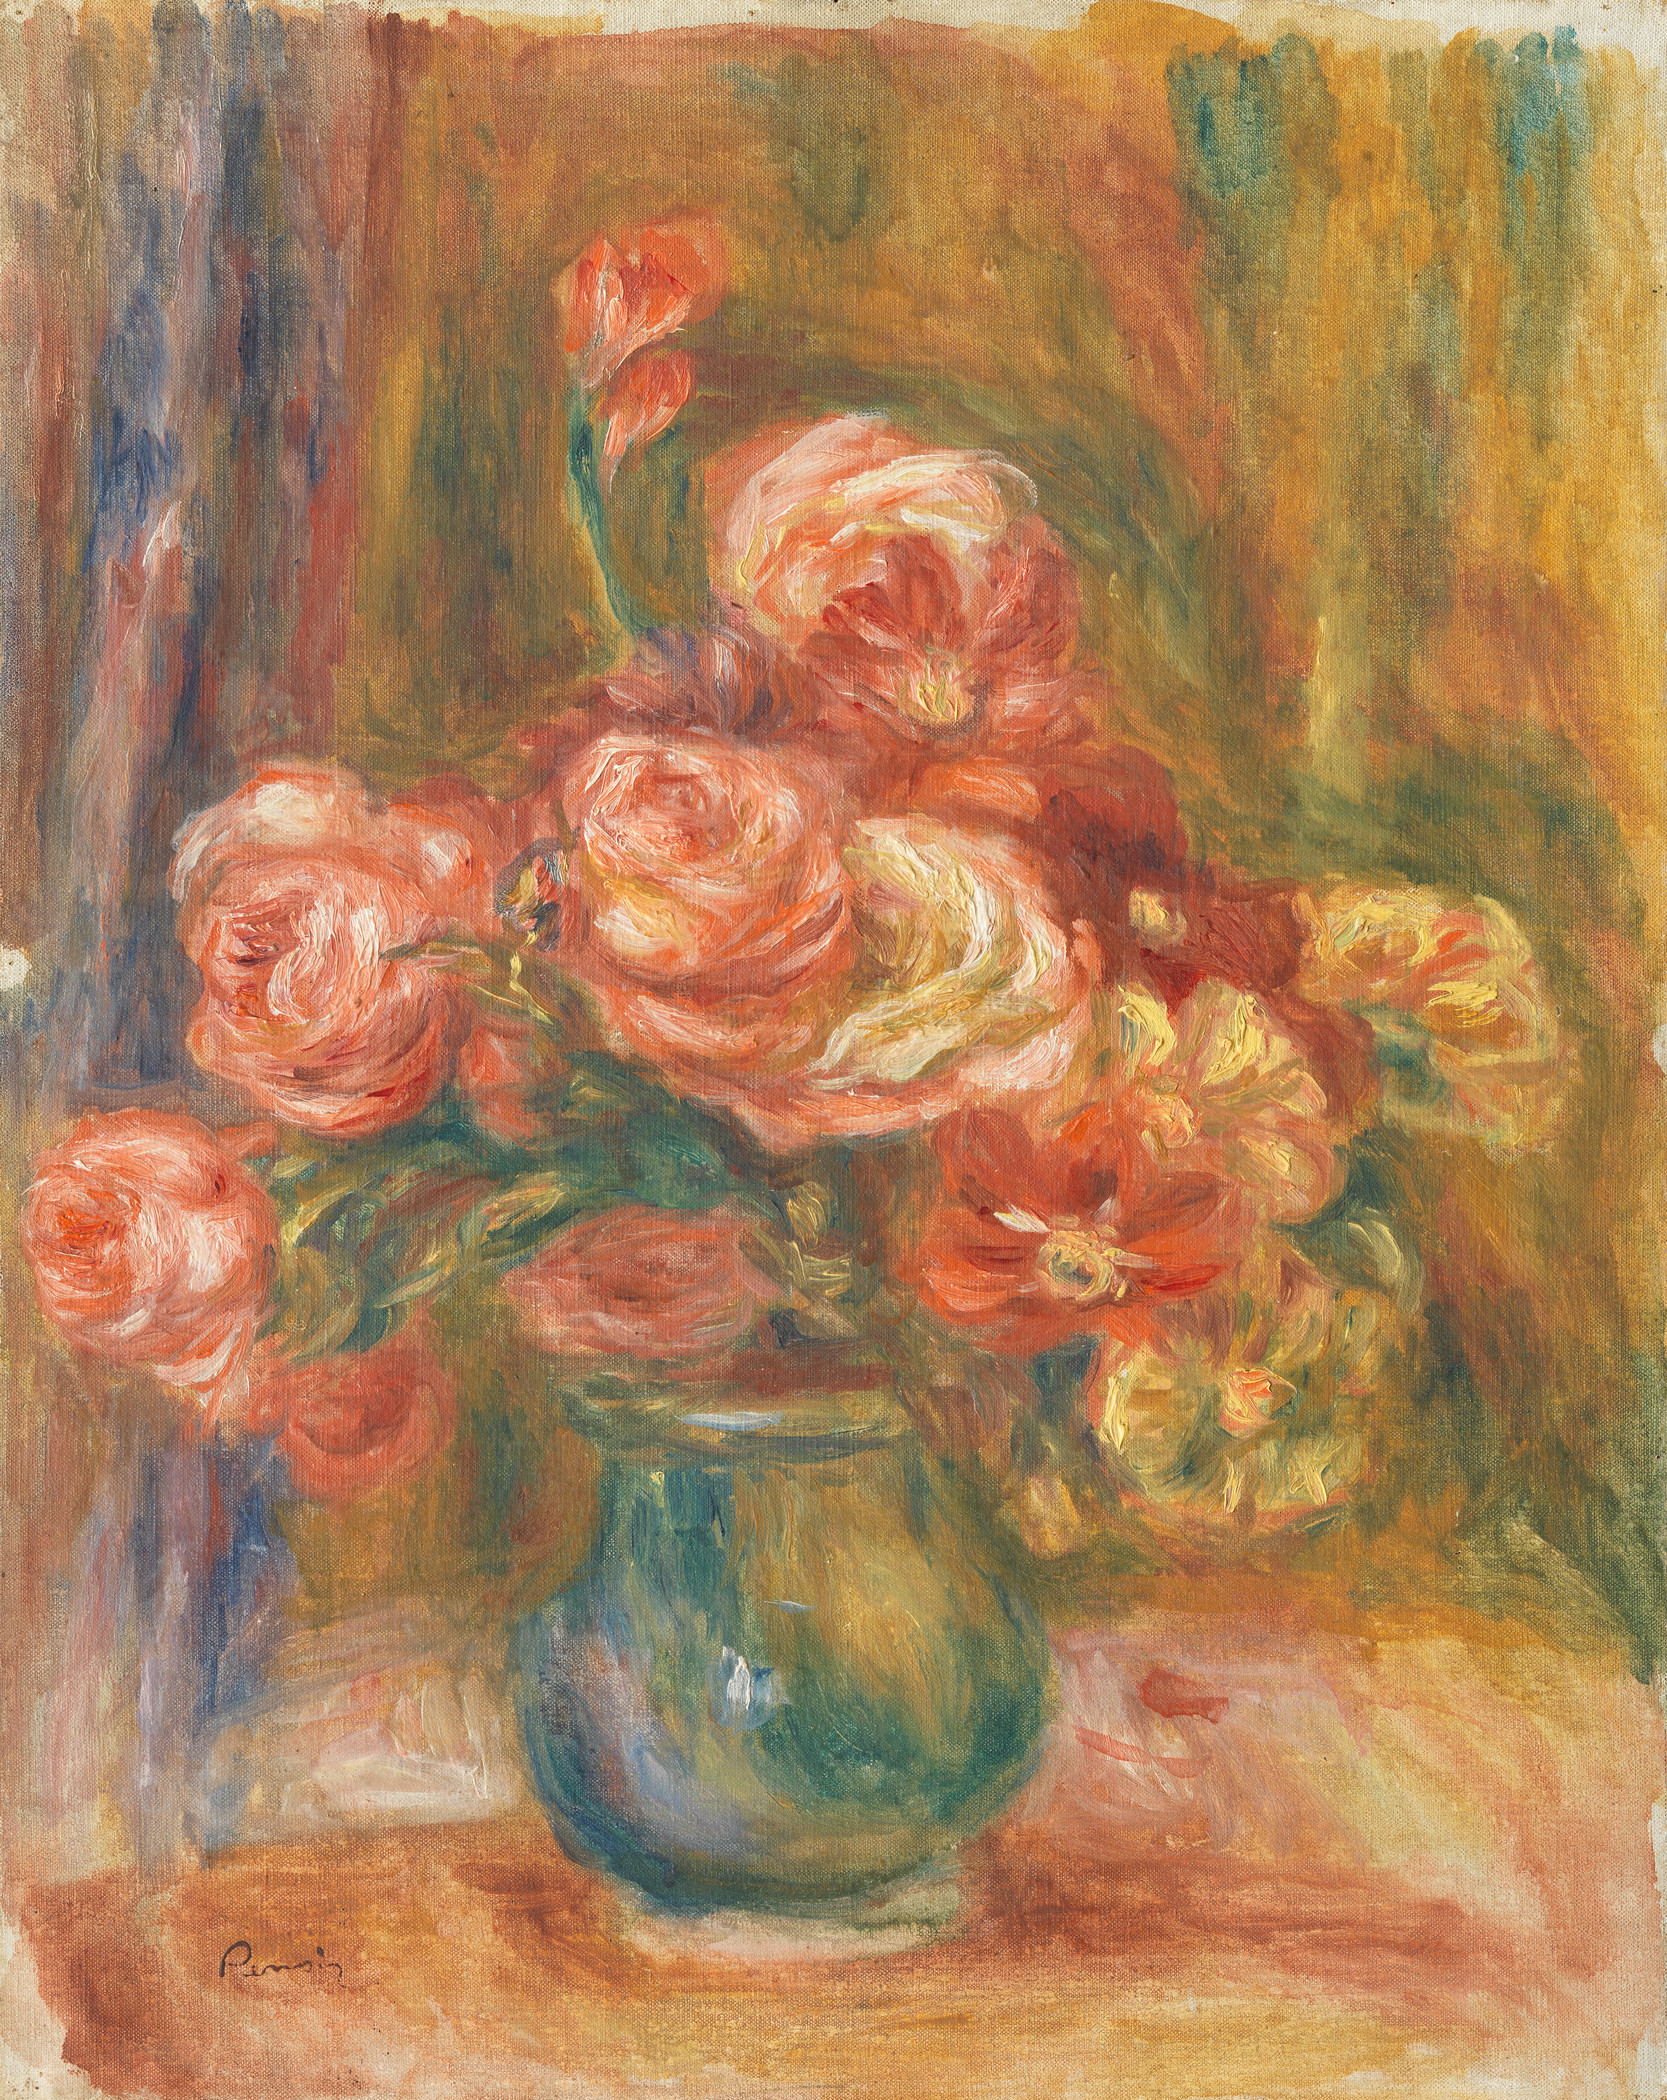 Vintage painting of roses in a vase